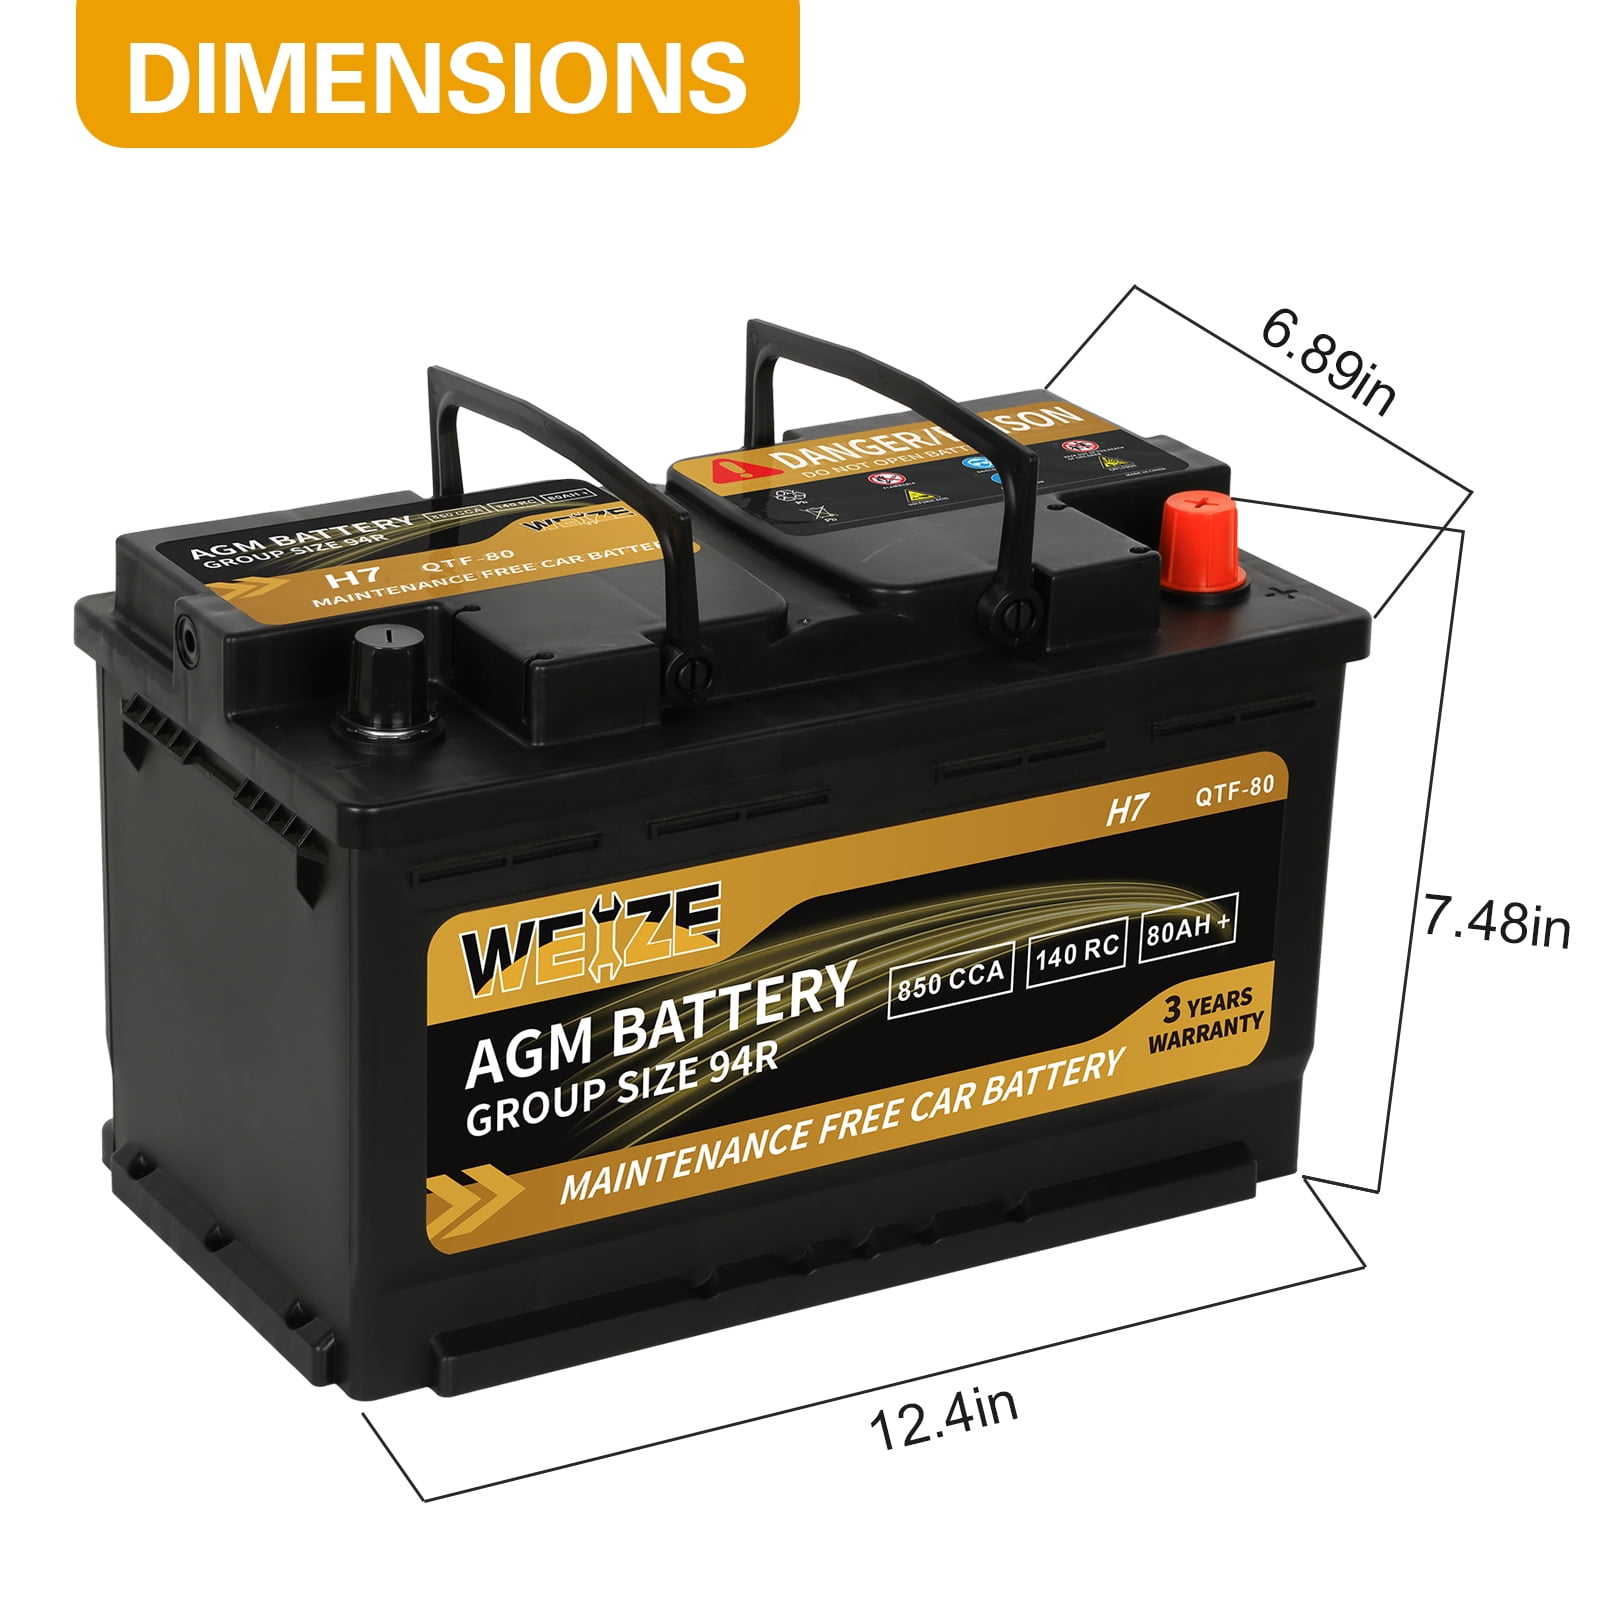 Weize Platinum AGM Automotive Battery,  Group 94R H7 Battery- 12v 80ah 140RC 850CCA, 36 Months Warranty